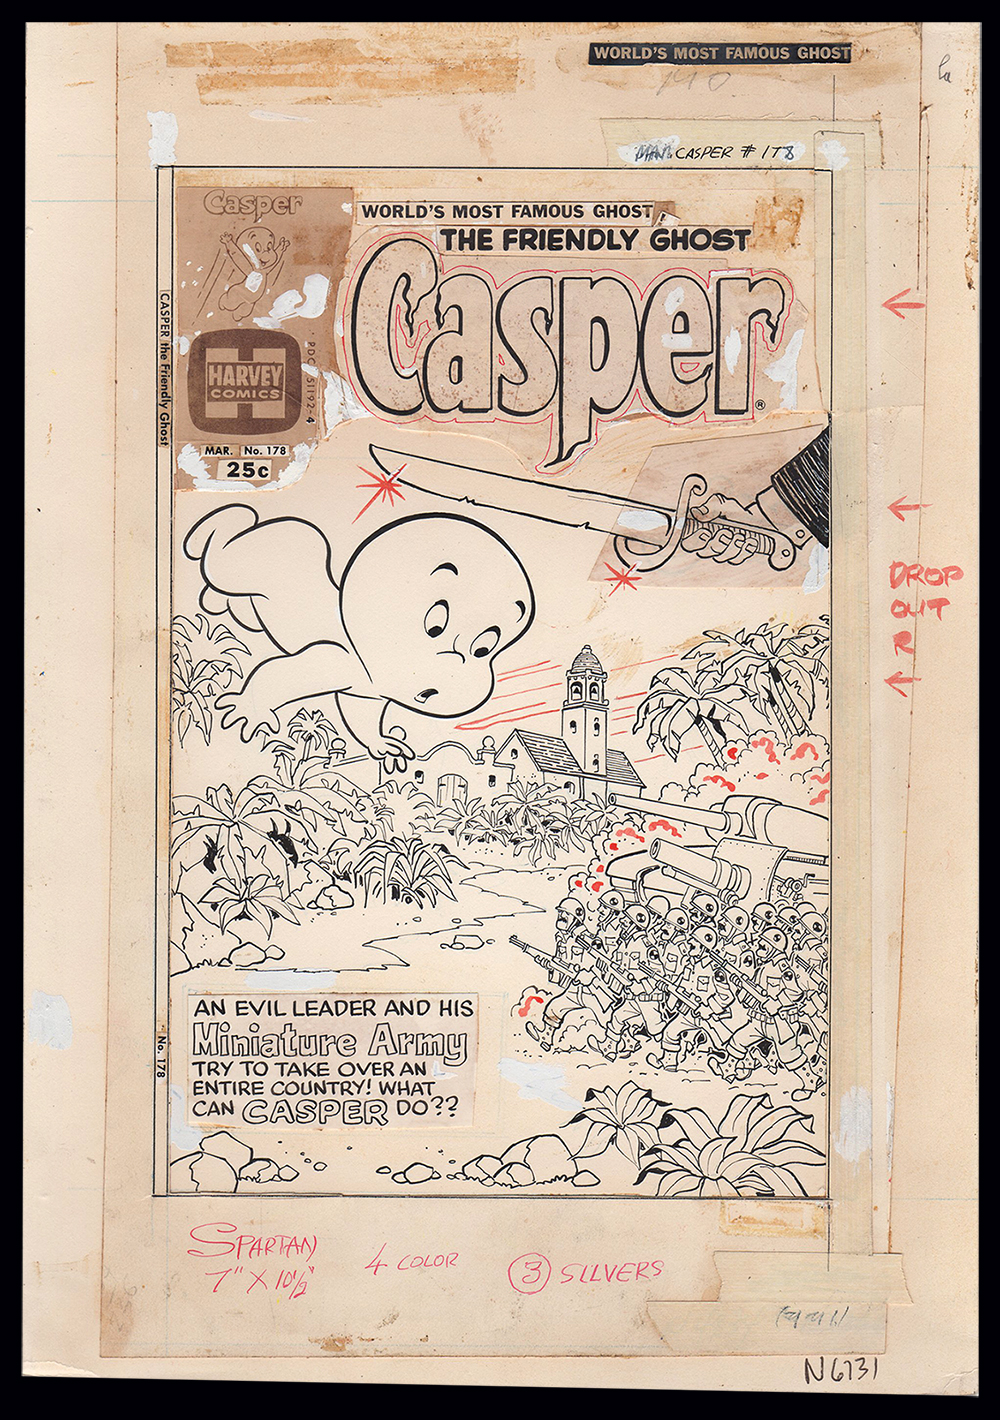 Image: Casper the Friendly Ghost #178 Cover Art by Ernie Colon